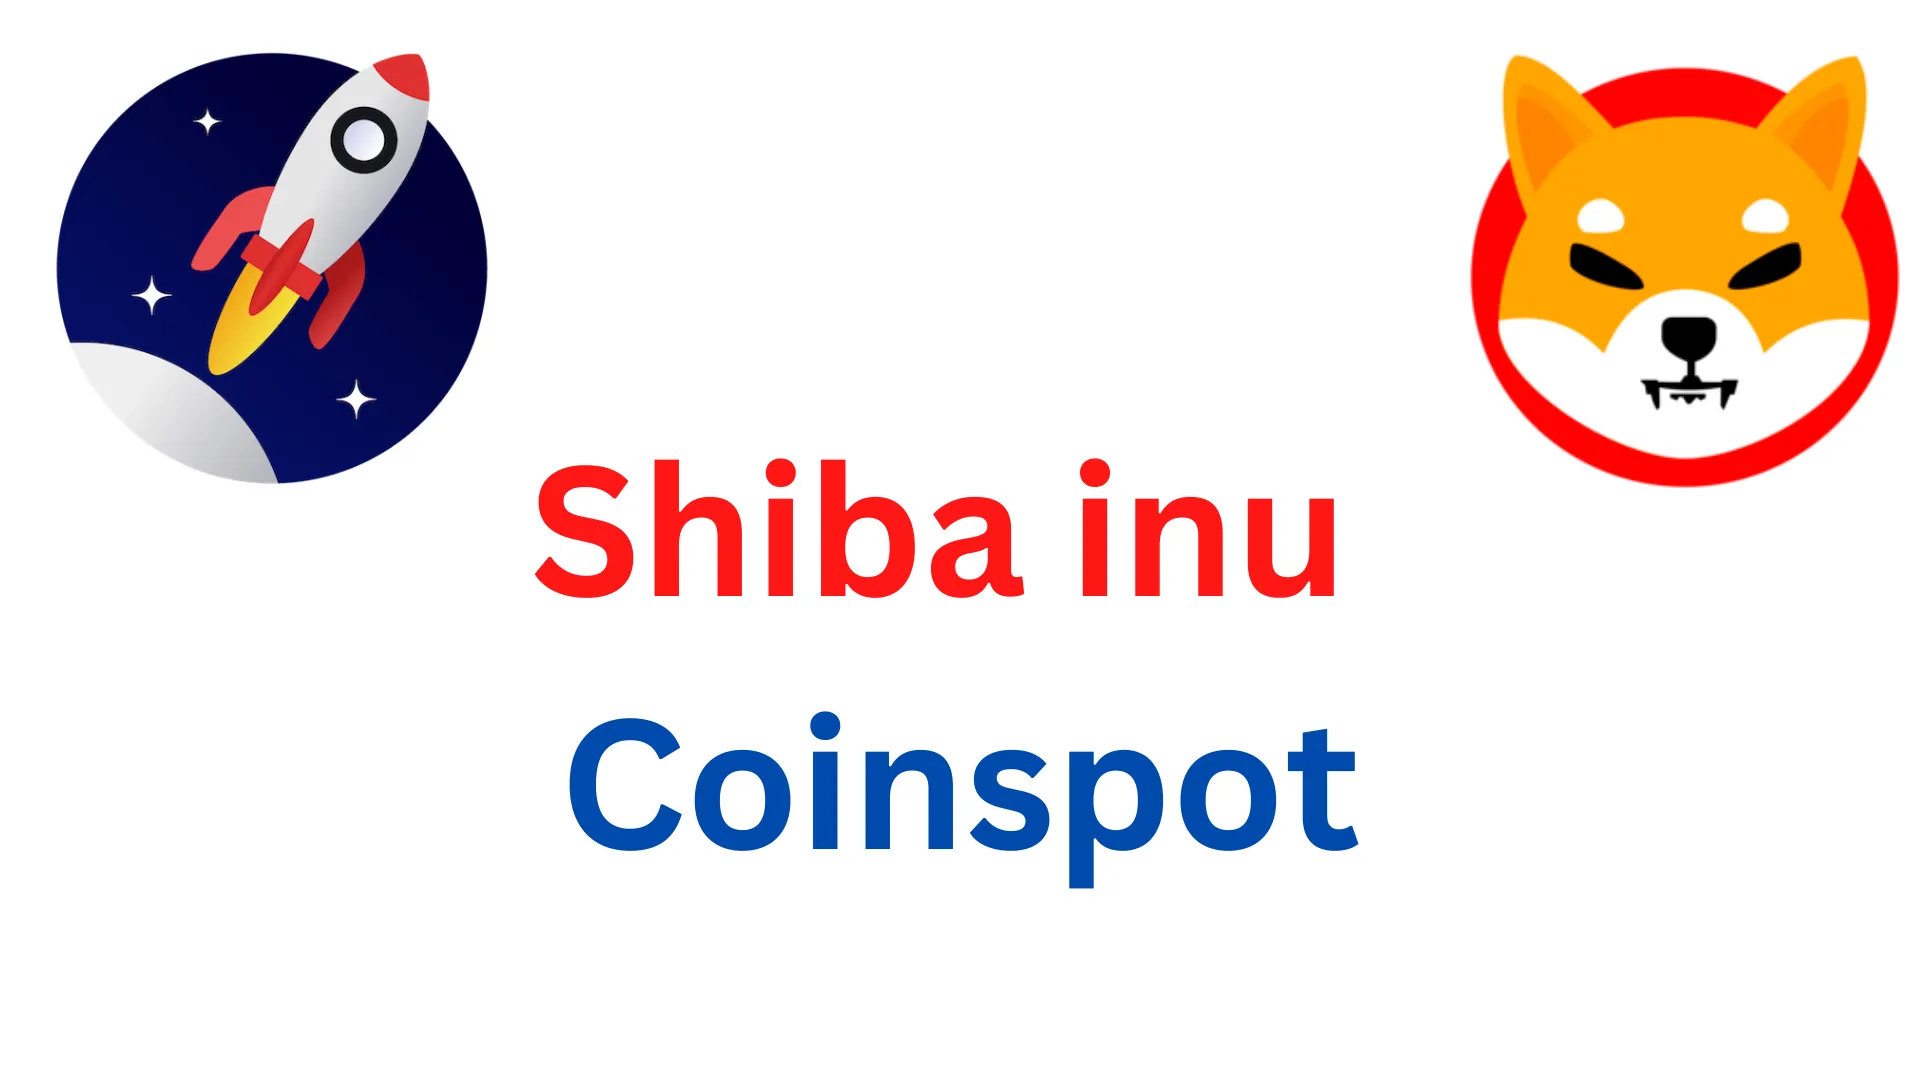 Shiba inu Coinspot